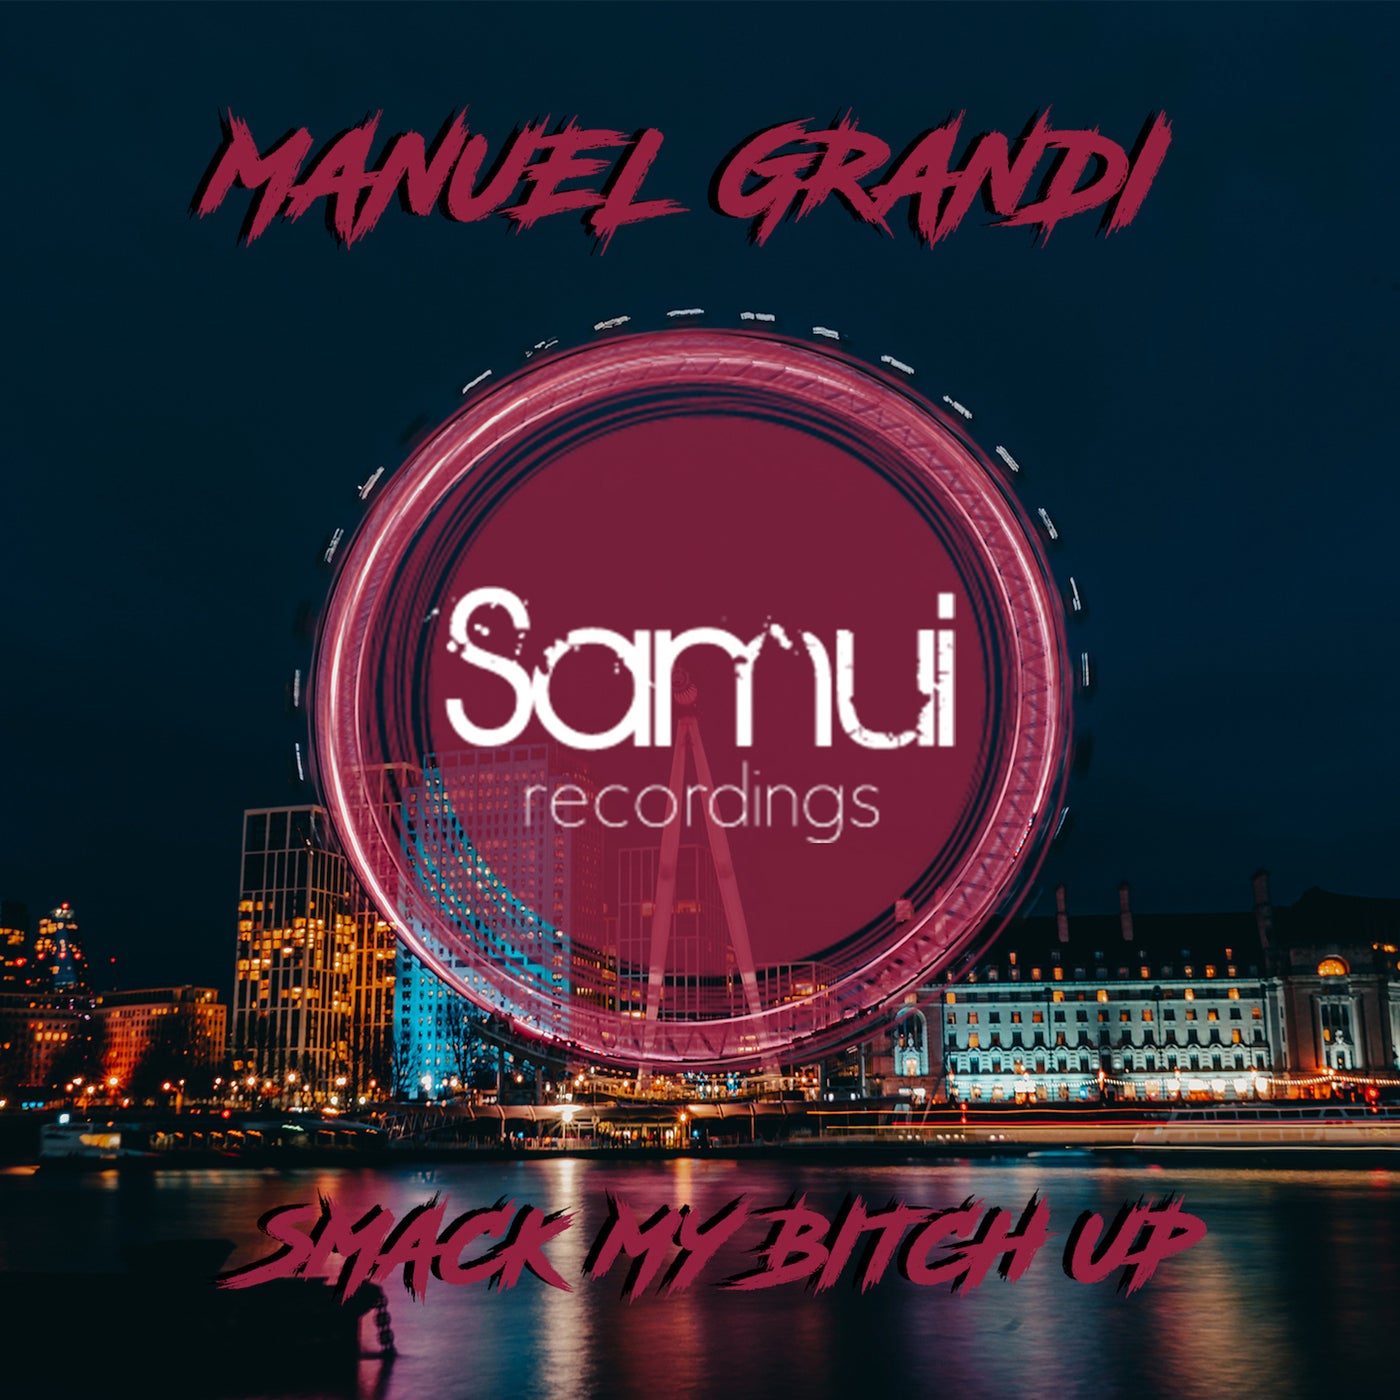 Manuel Grandi - Smack My Bitch Up (Club Mix)